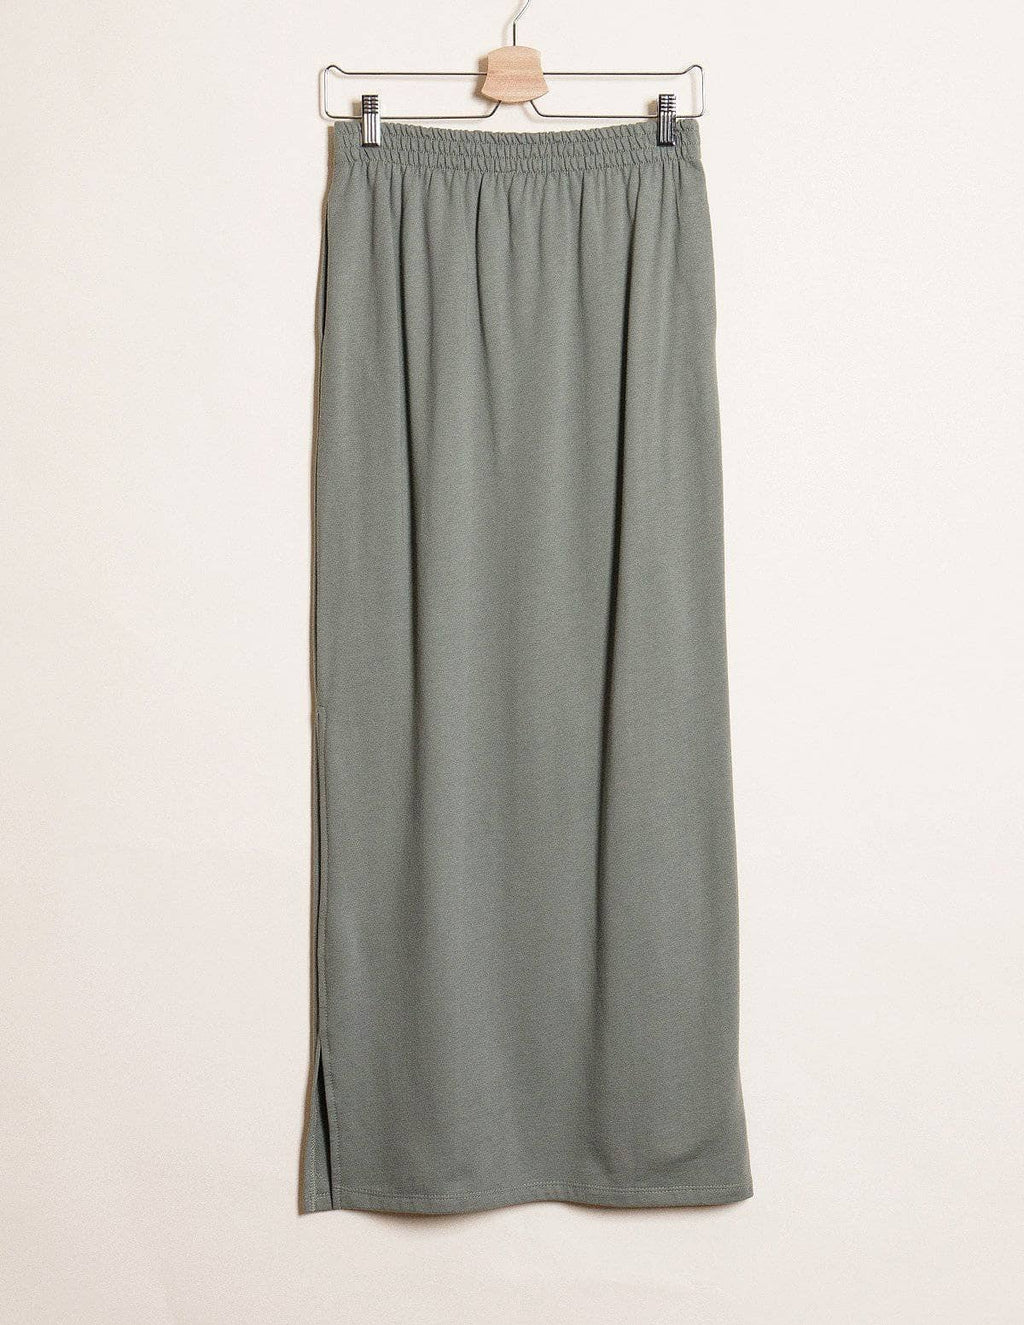 Hemp Fleece Easy Day Skirt — Sivana